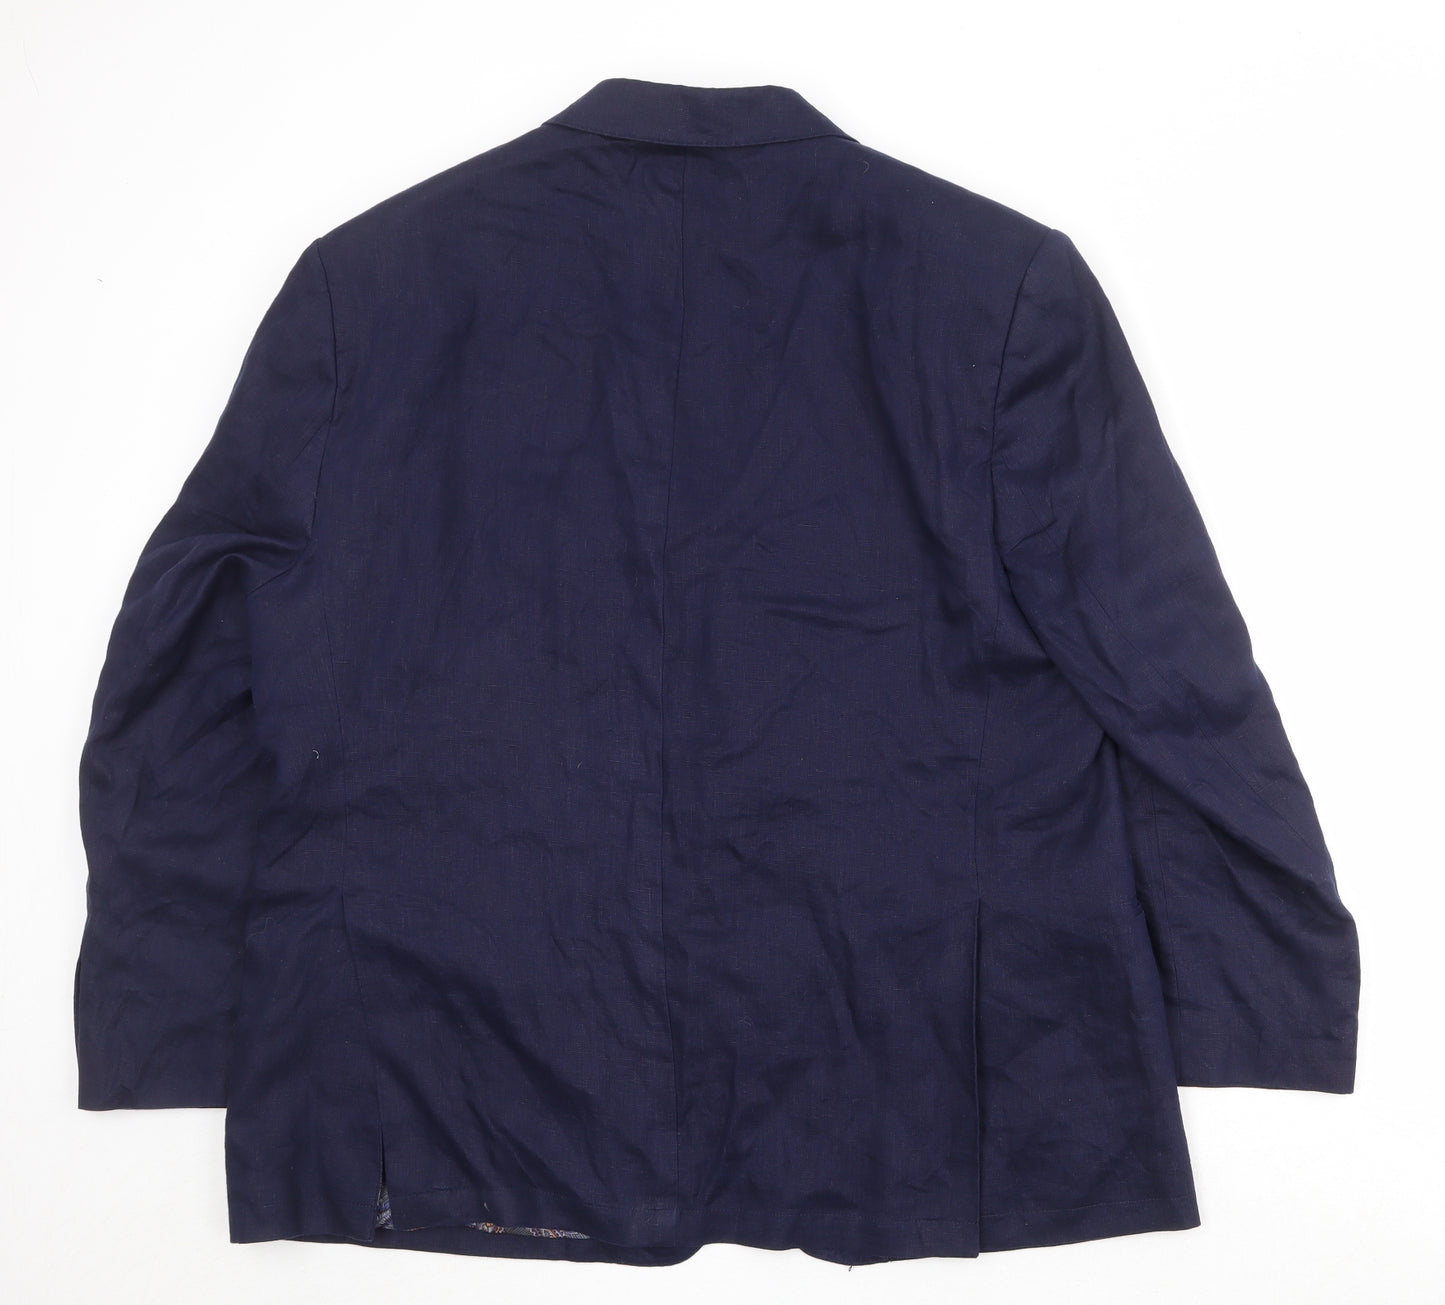 Peter Chr Mens Blue Linen Jacket Suit Jacket Size 46 Regular